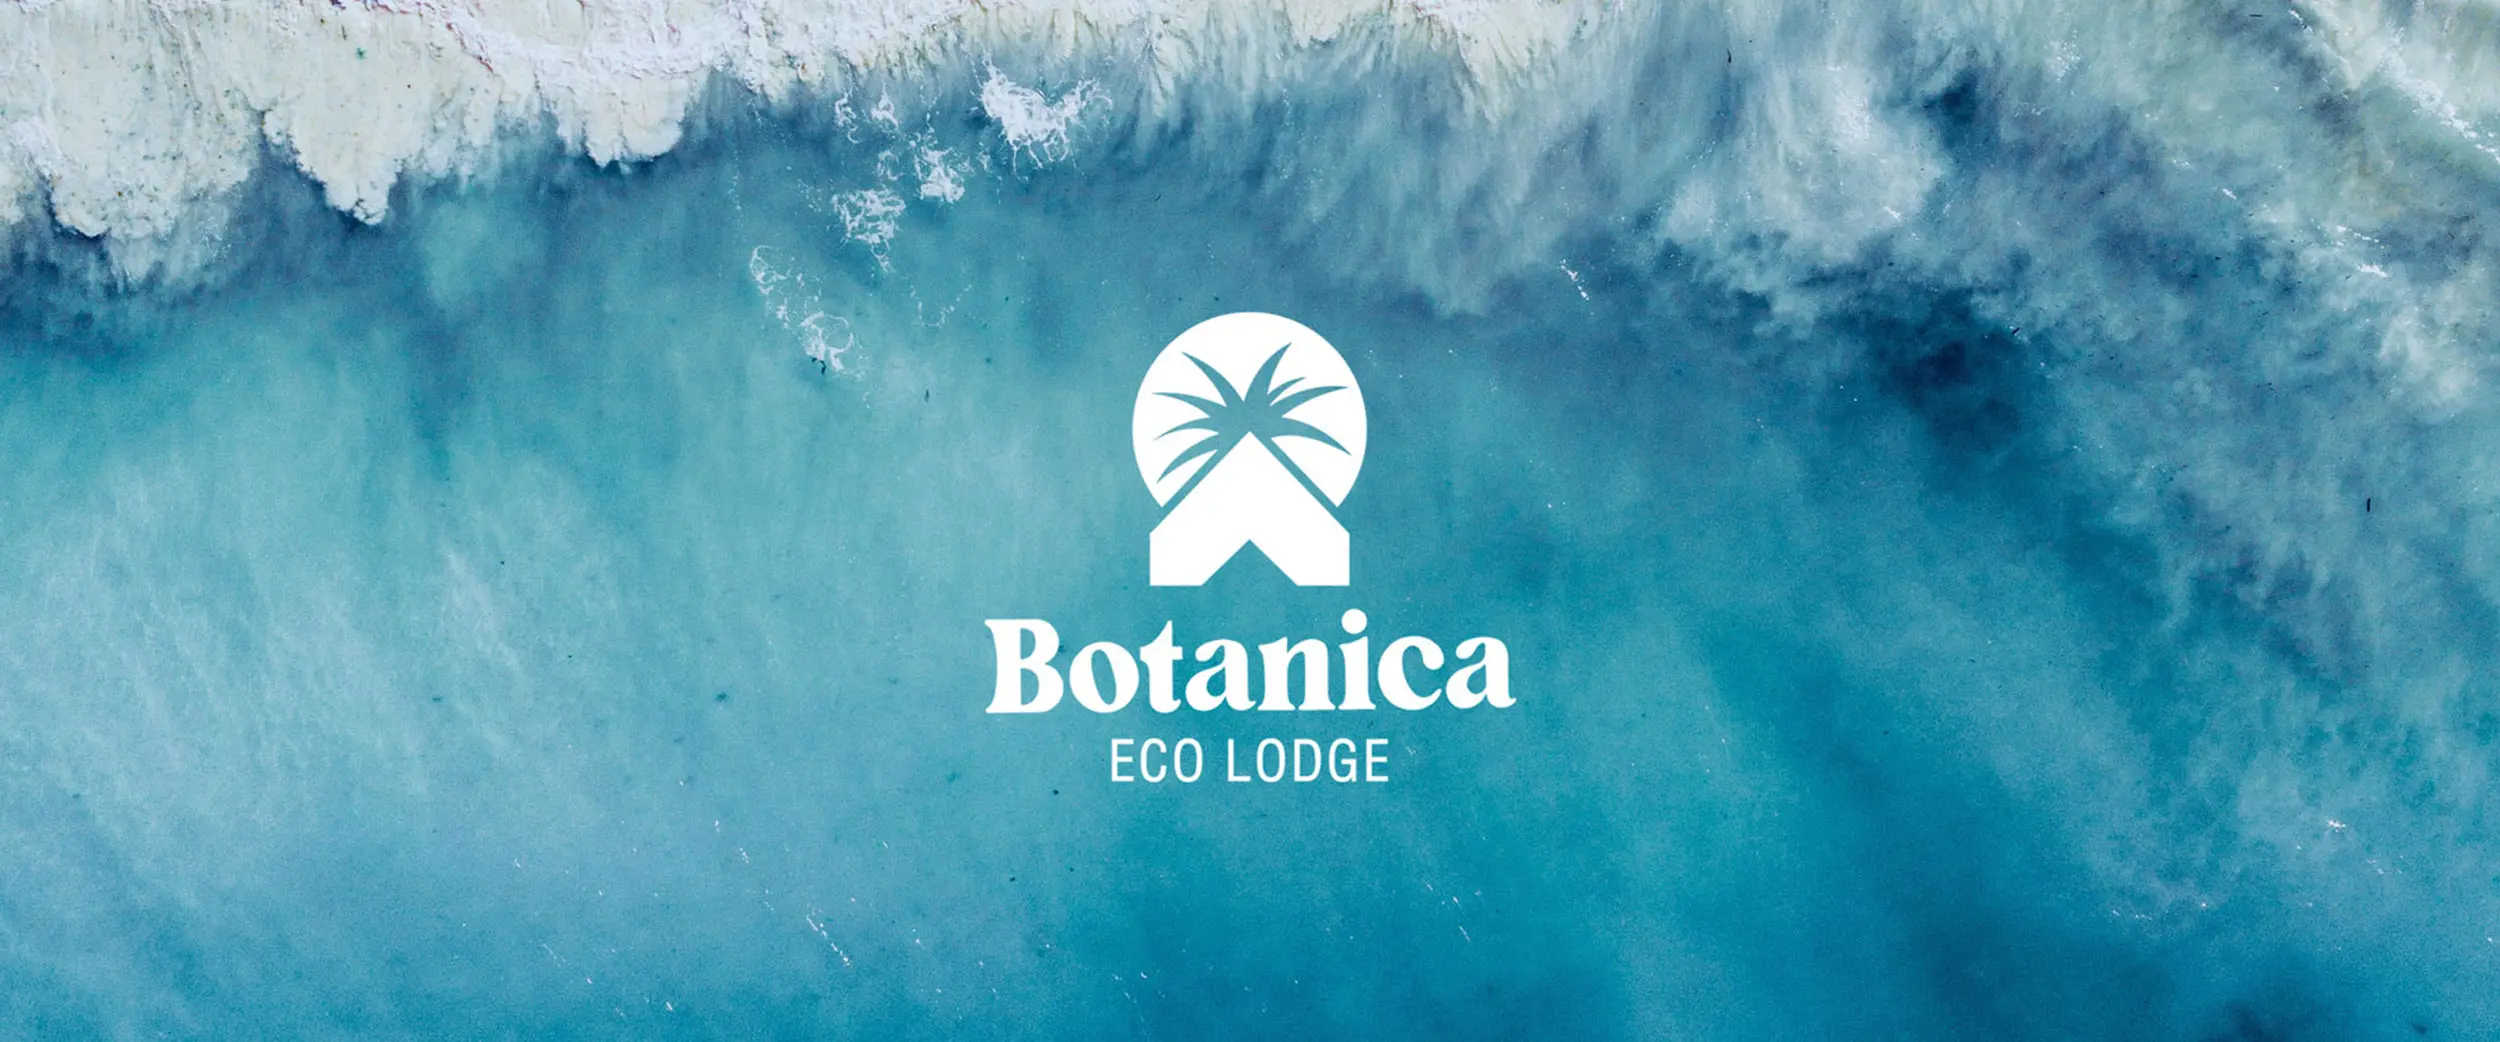 Gabriele Marchina - Botanica Eco Lodge